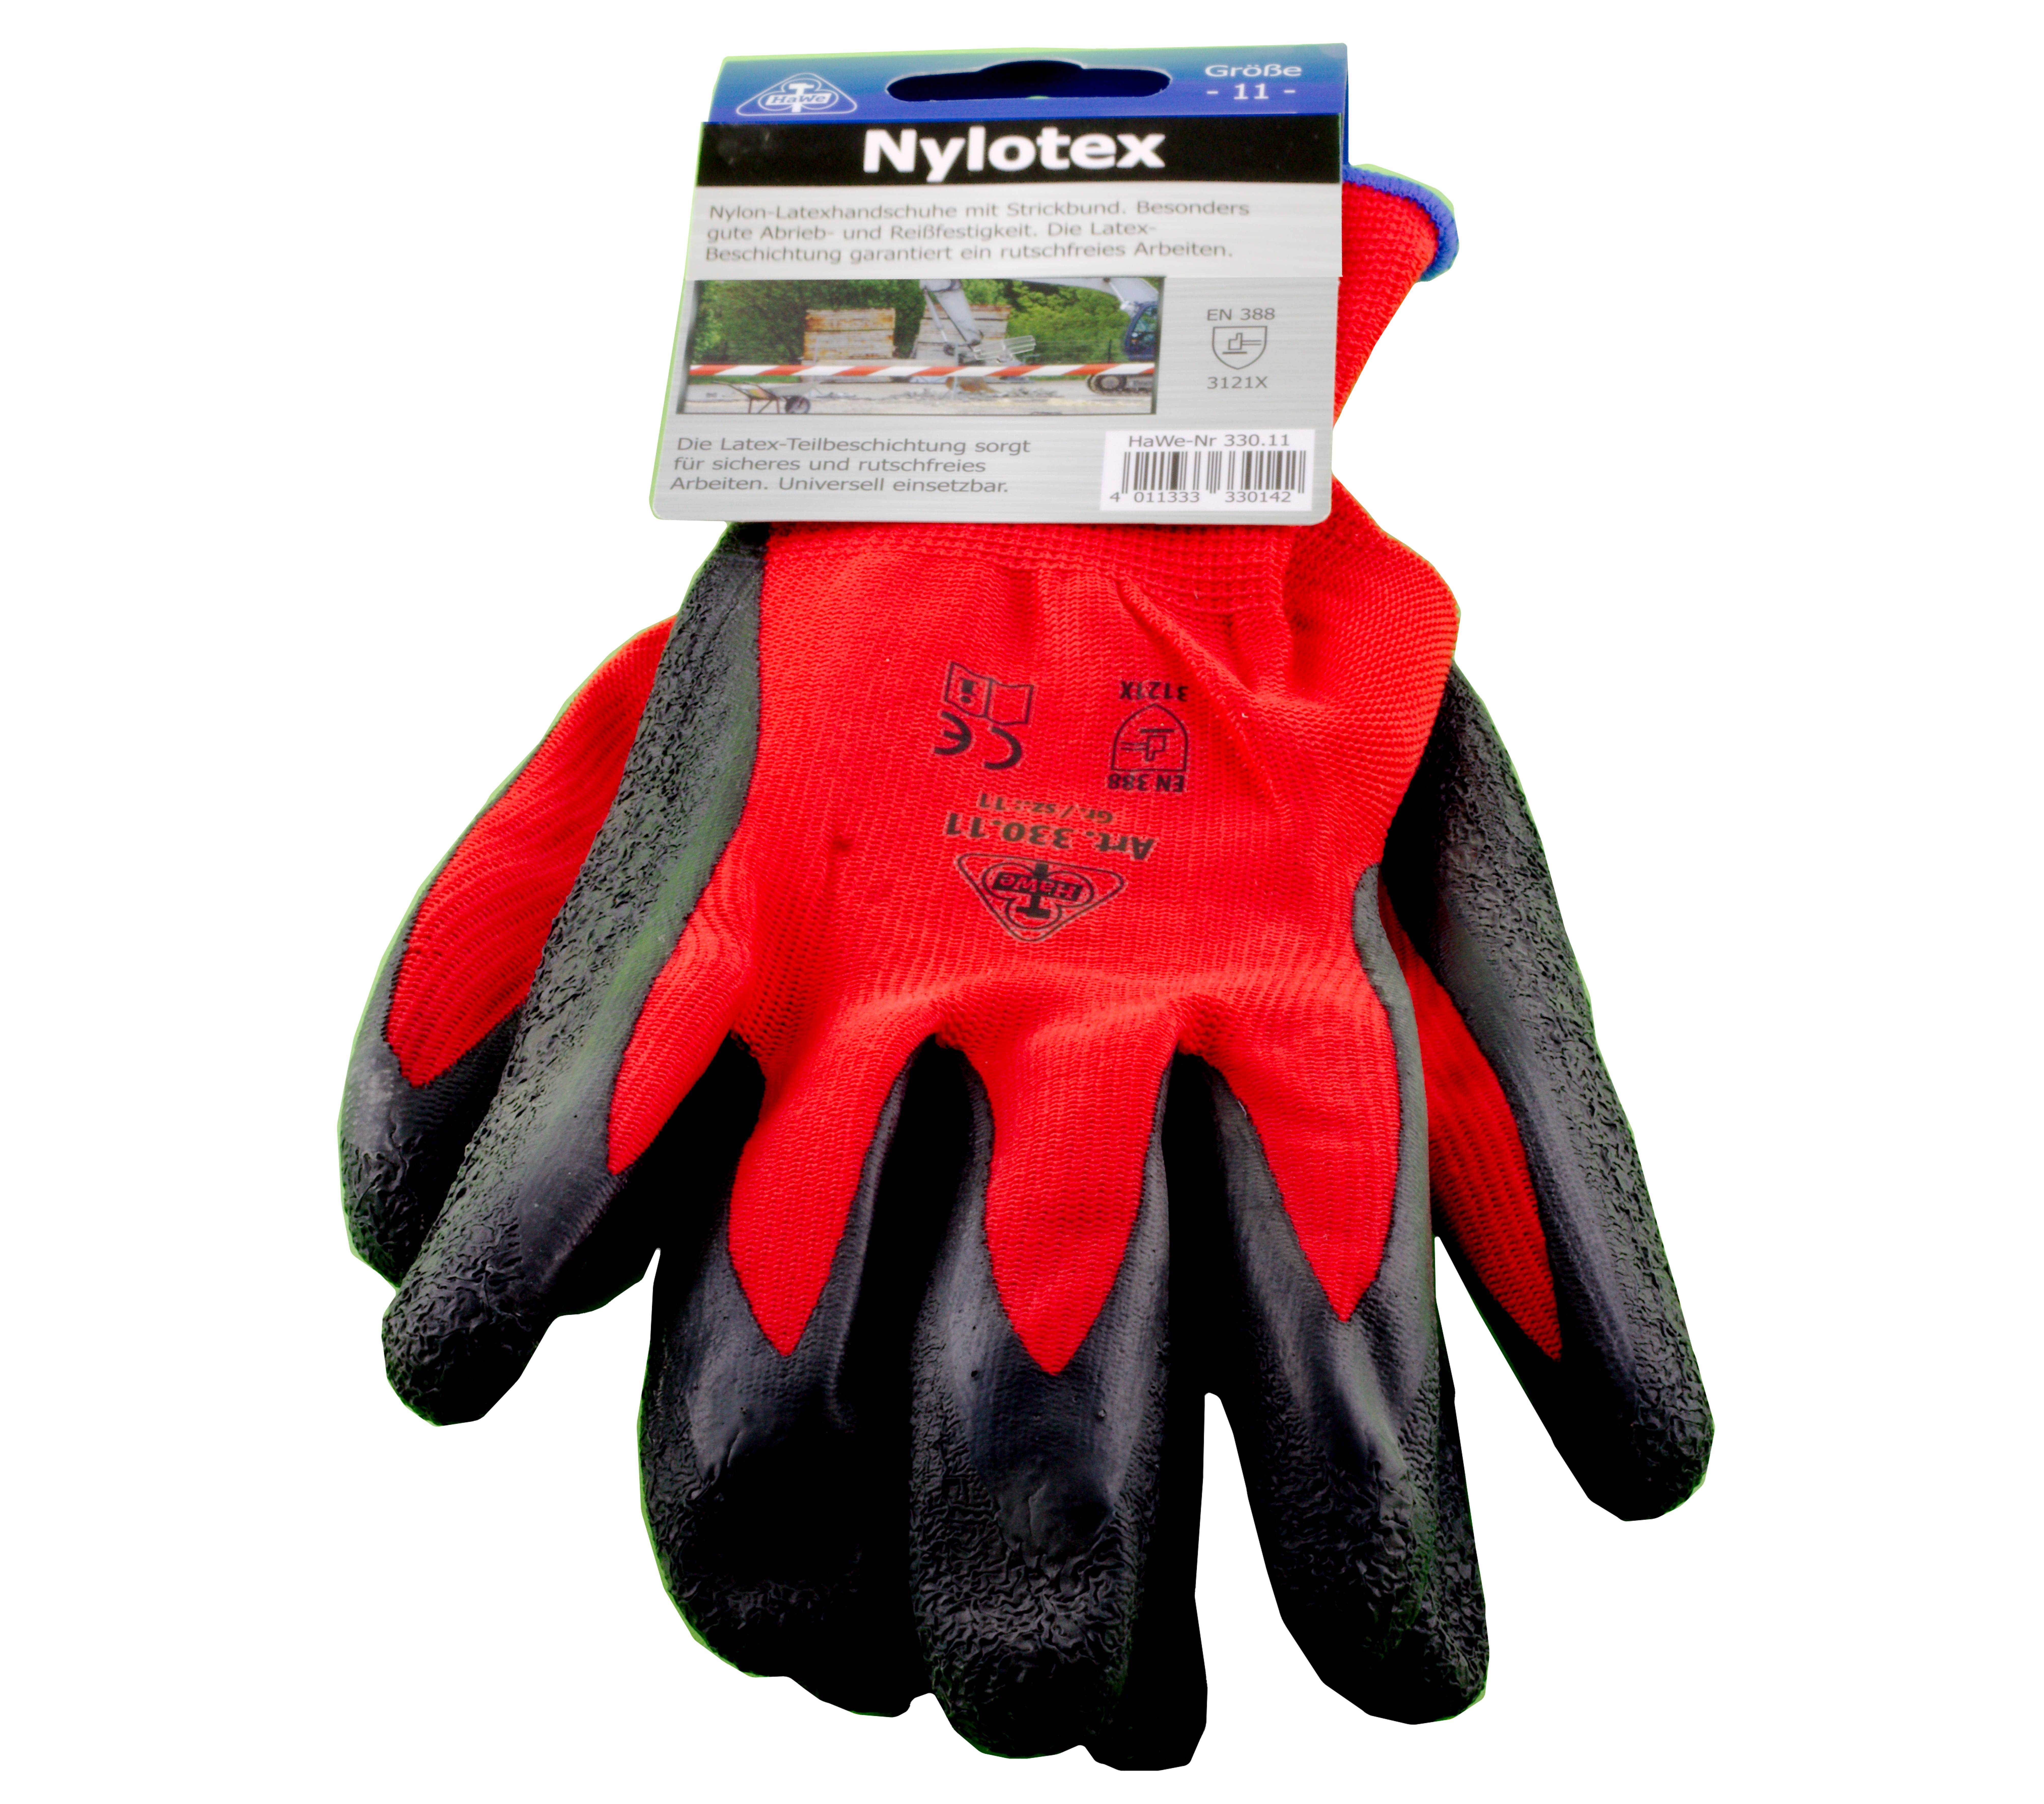 Handschuhe Nylotex rot-schwarz  Gr. 9